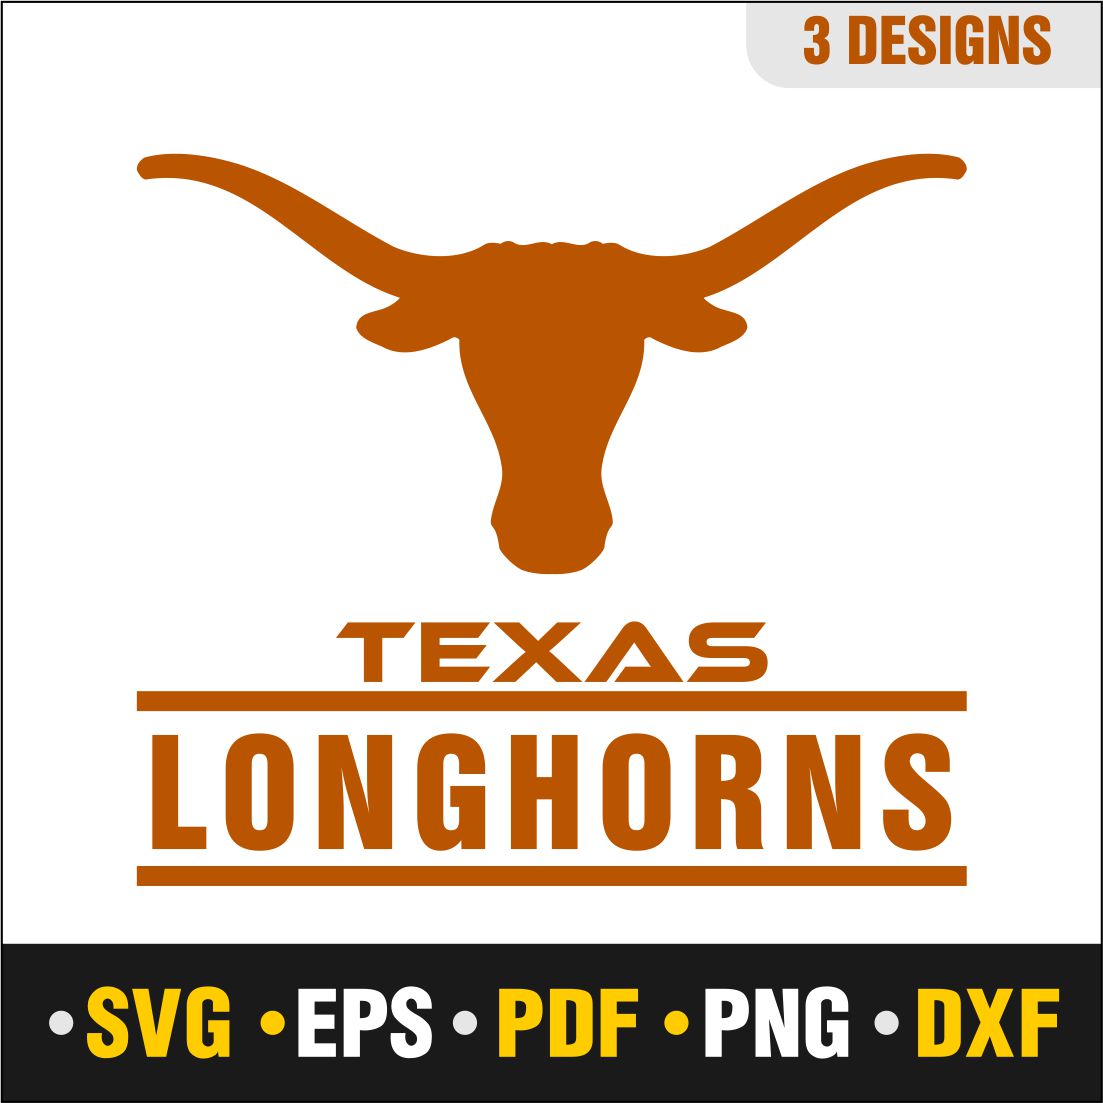 Texas Longhorns College Monogram main cover.